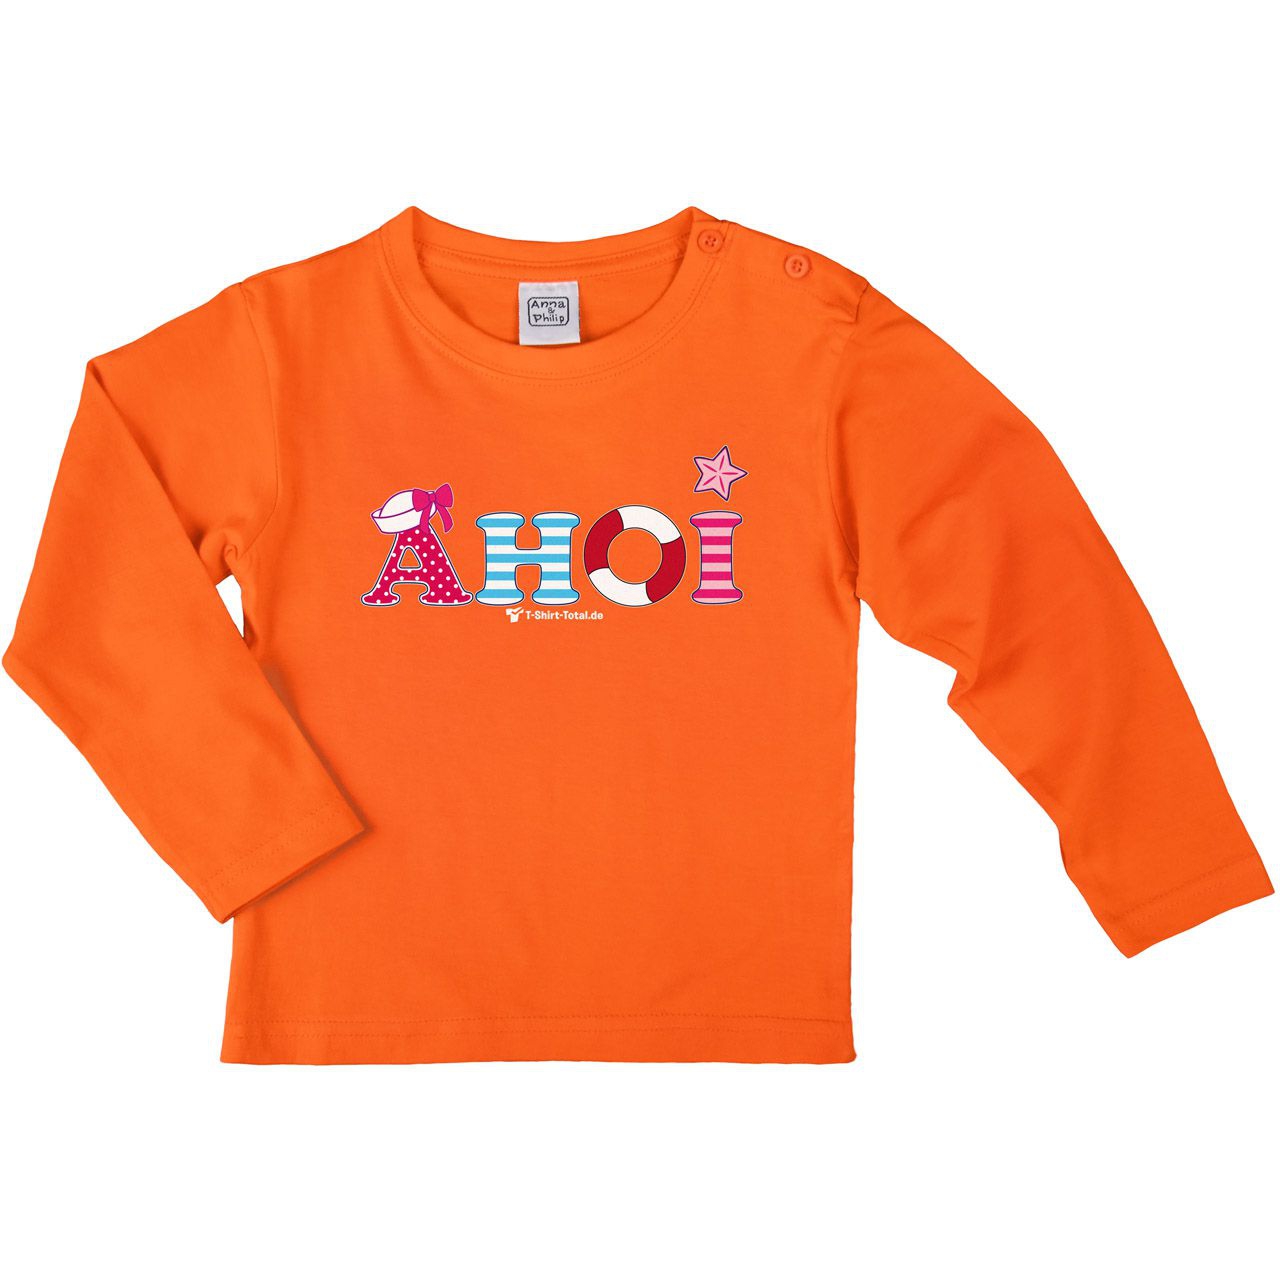 Ahoi Schleife Kinder Langarm Shirt orange 104